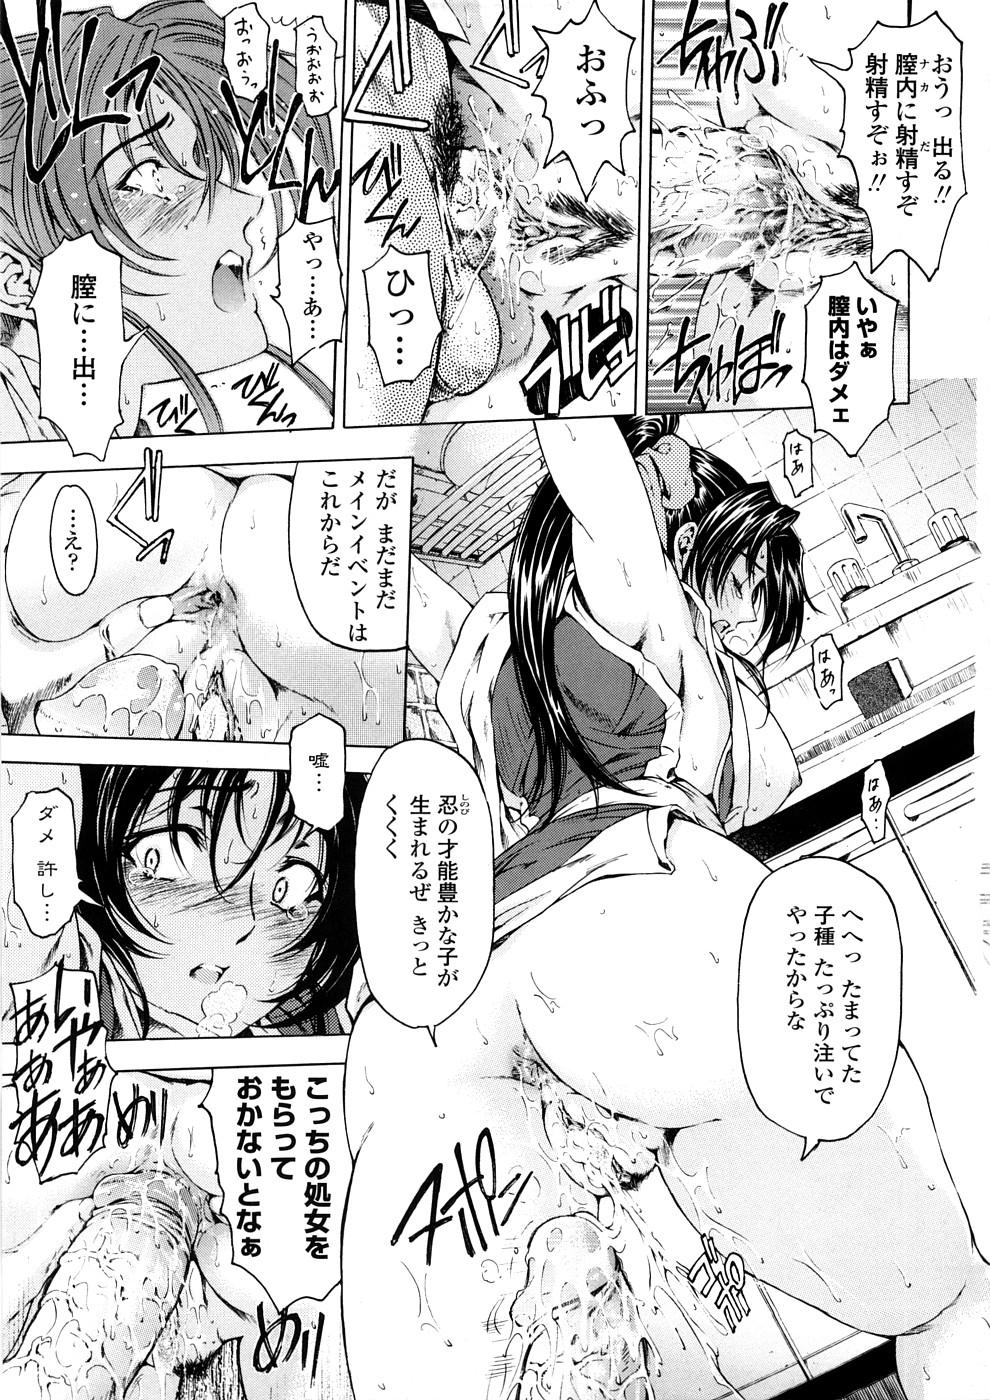 Hakase no Strange na Aijou - Hiroshi's Strange Love 216